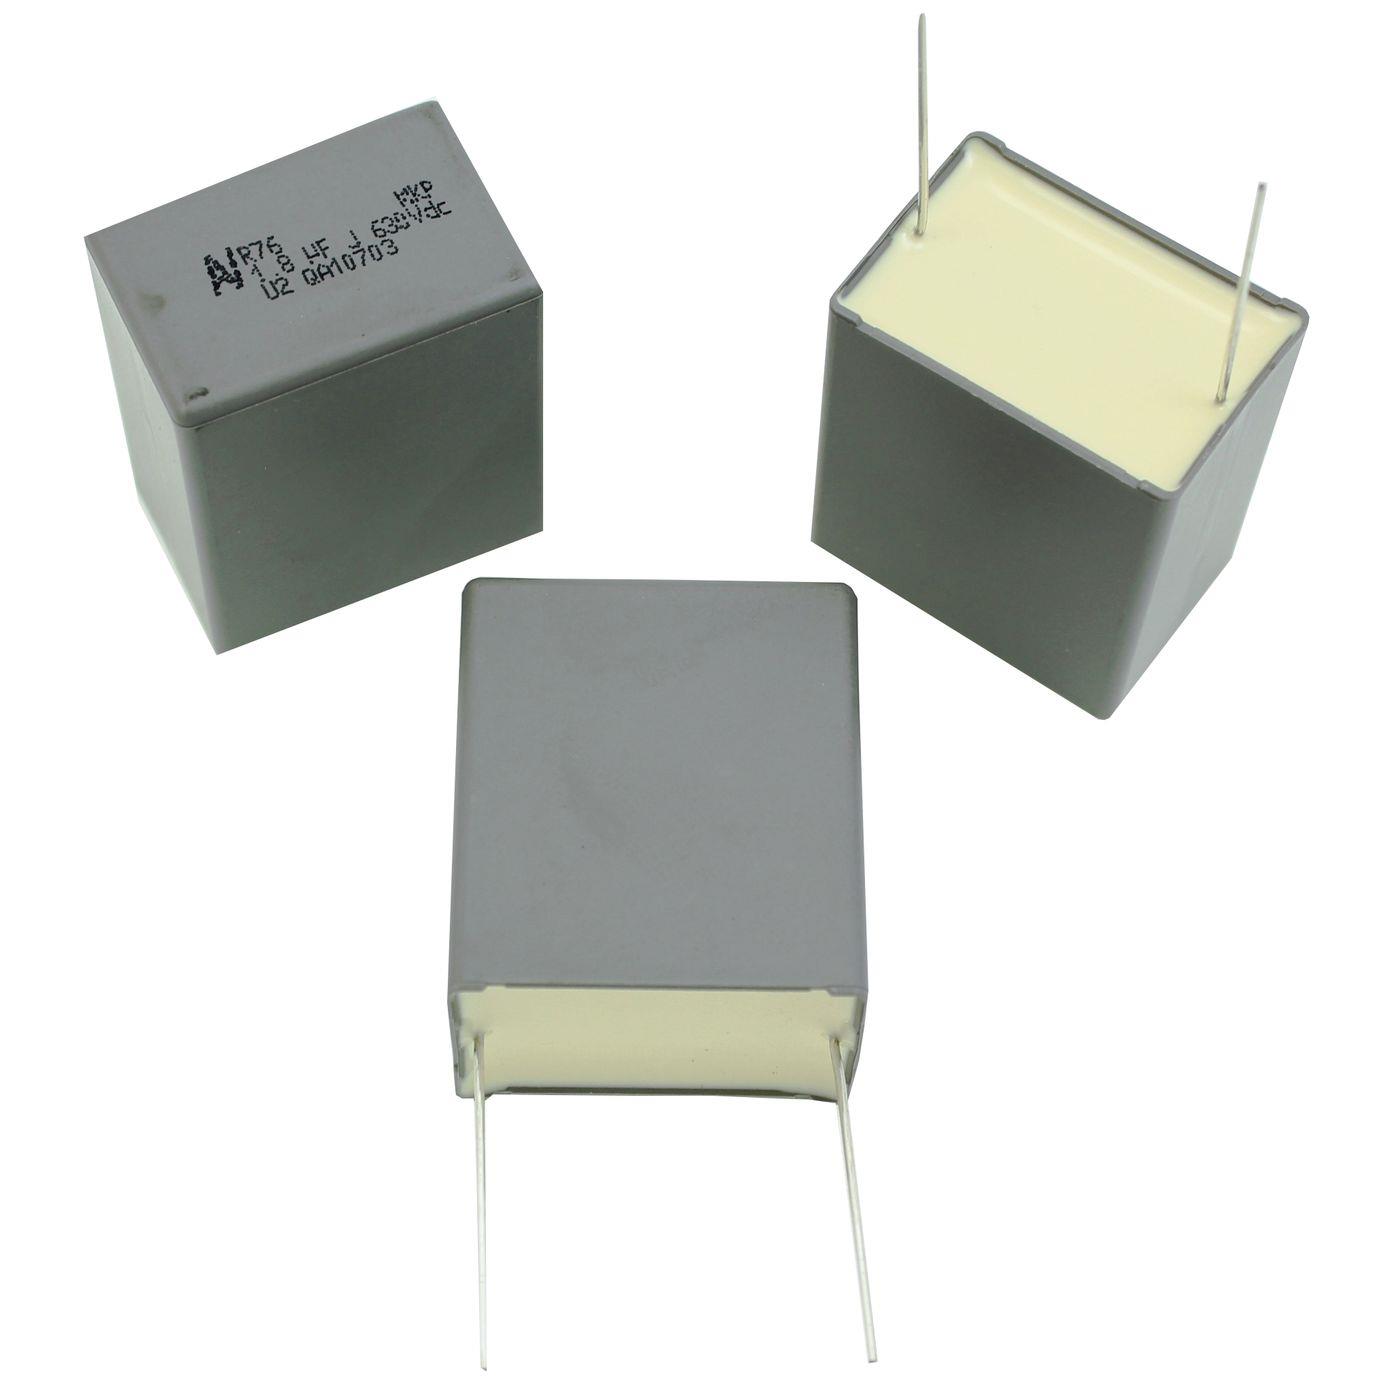 MMKP Folien Kondensator Radial 1,8µF 630V DC Arcotronics R76PR41805030J 1800nF